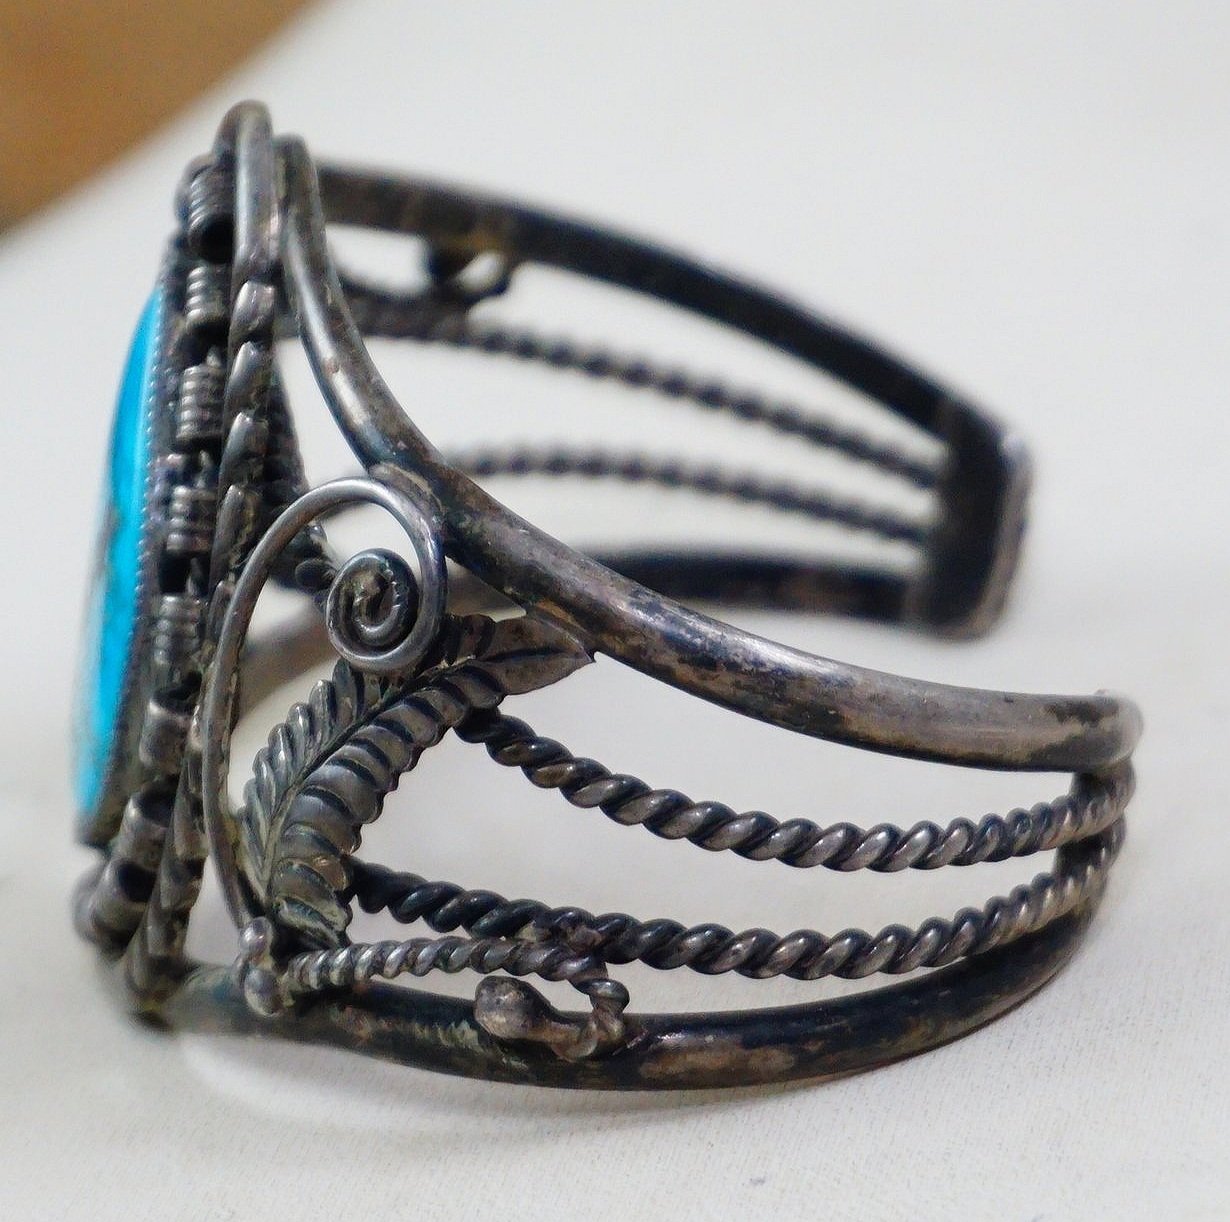 Native American Style Wrap Bracelet - YouTube